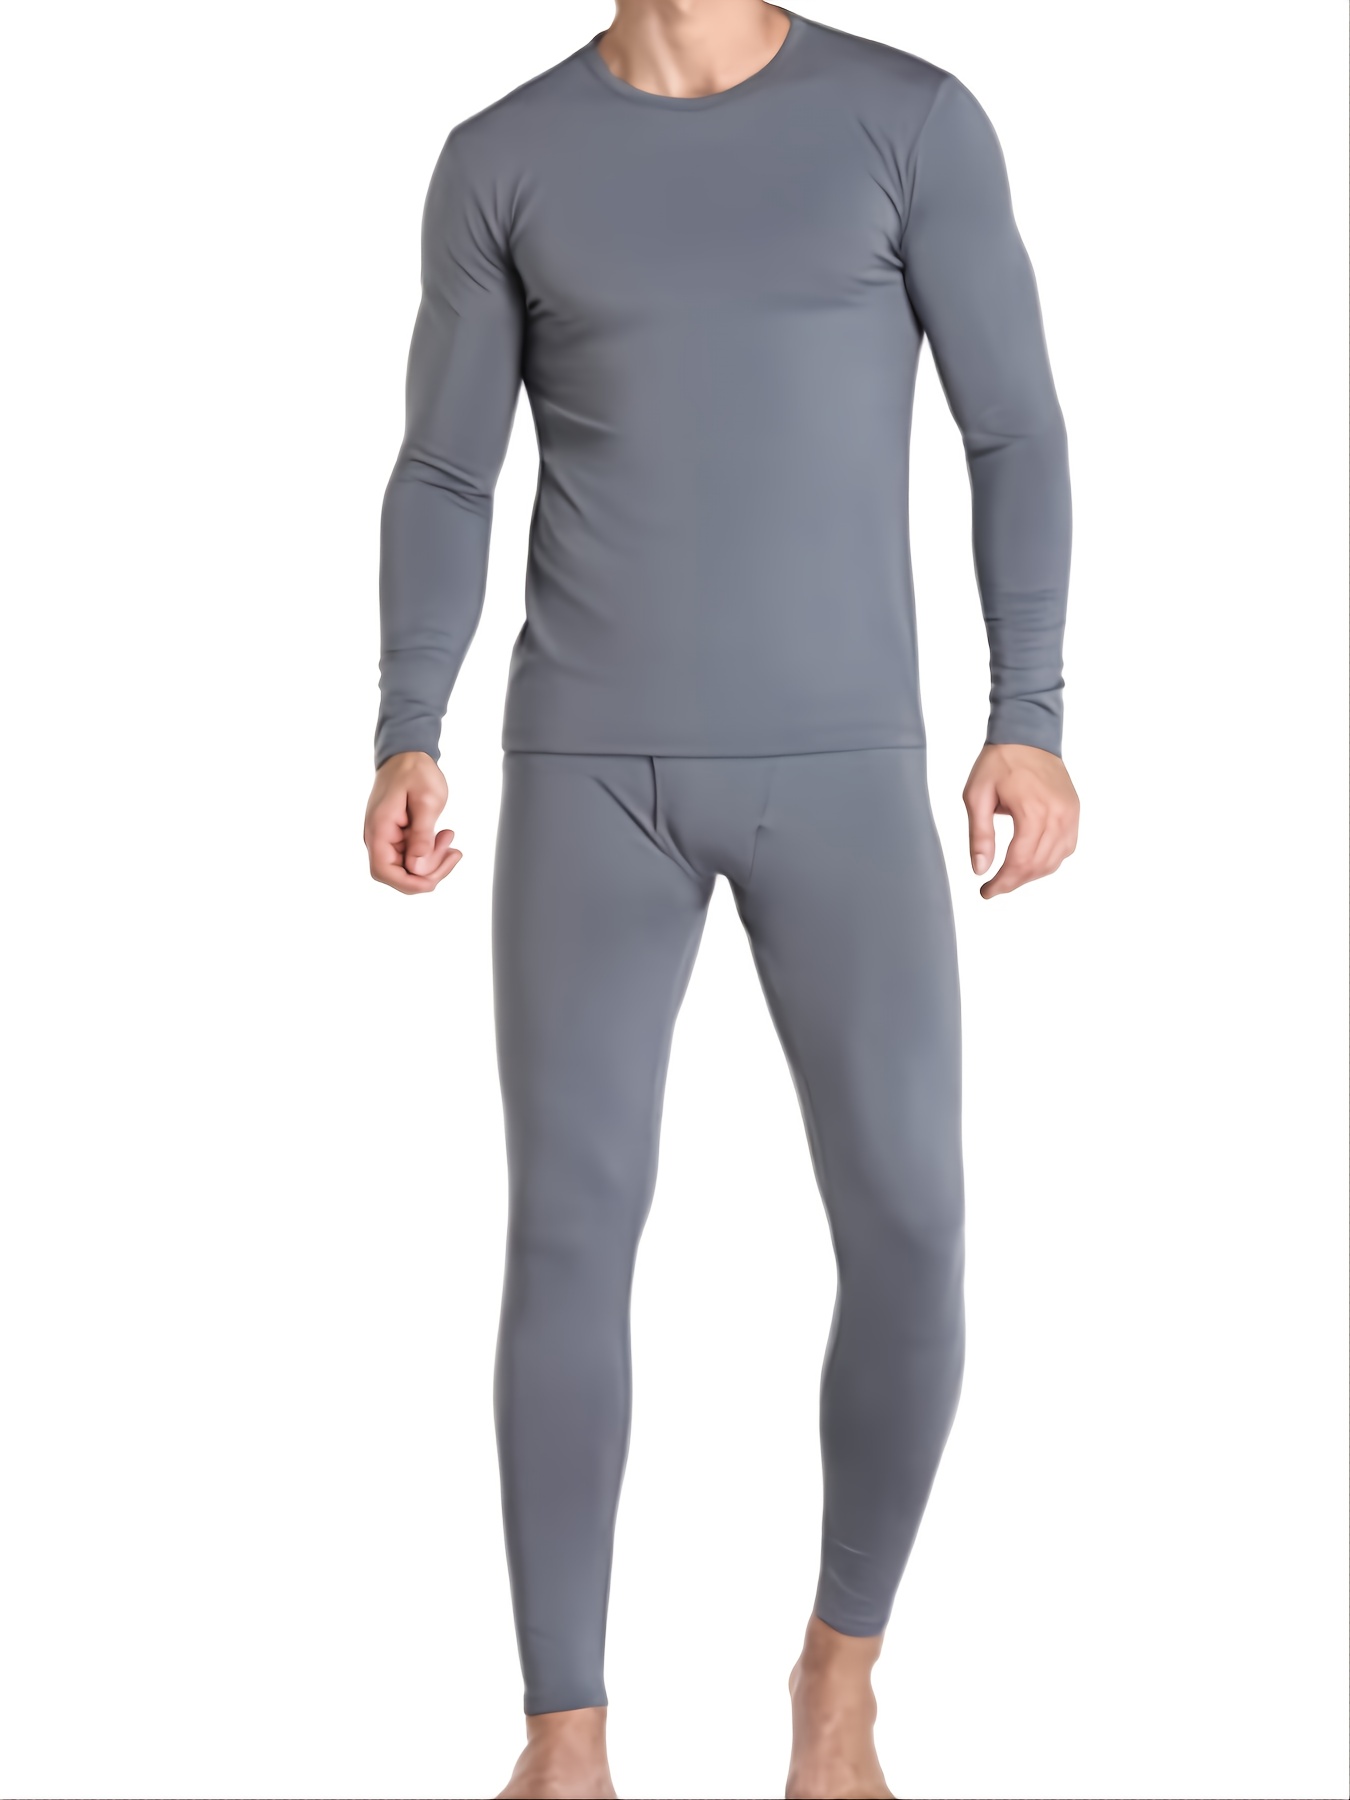 ALQYST New Men Thermal Underwear Underwear Sets Compression Thin Sweat Fast  Drying Thermal Underwear Clothes,Orange - suit,M price in UAE,  UAE